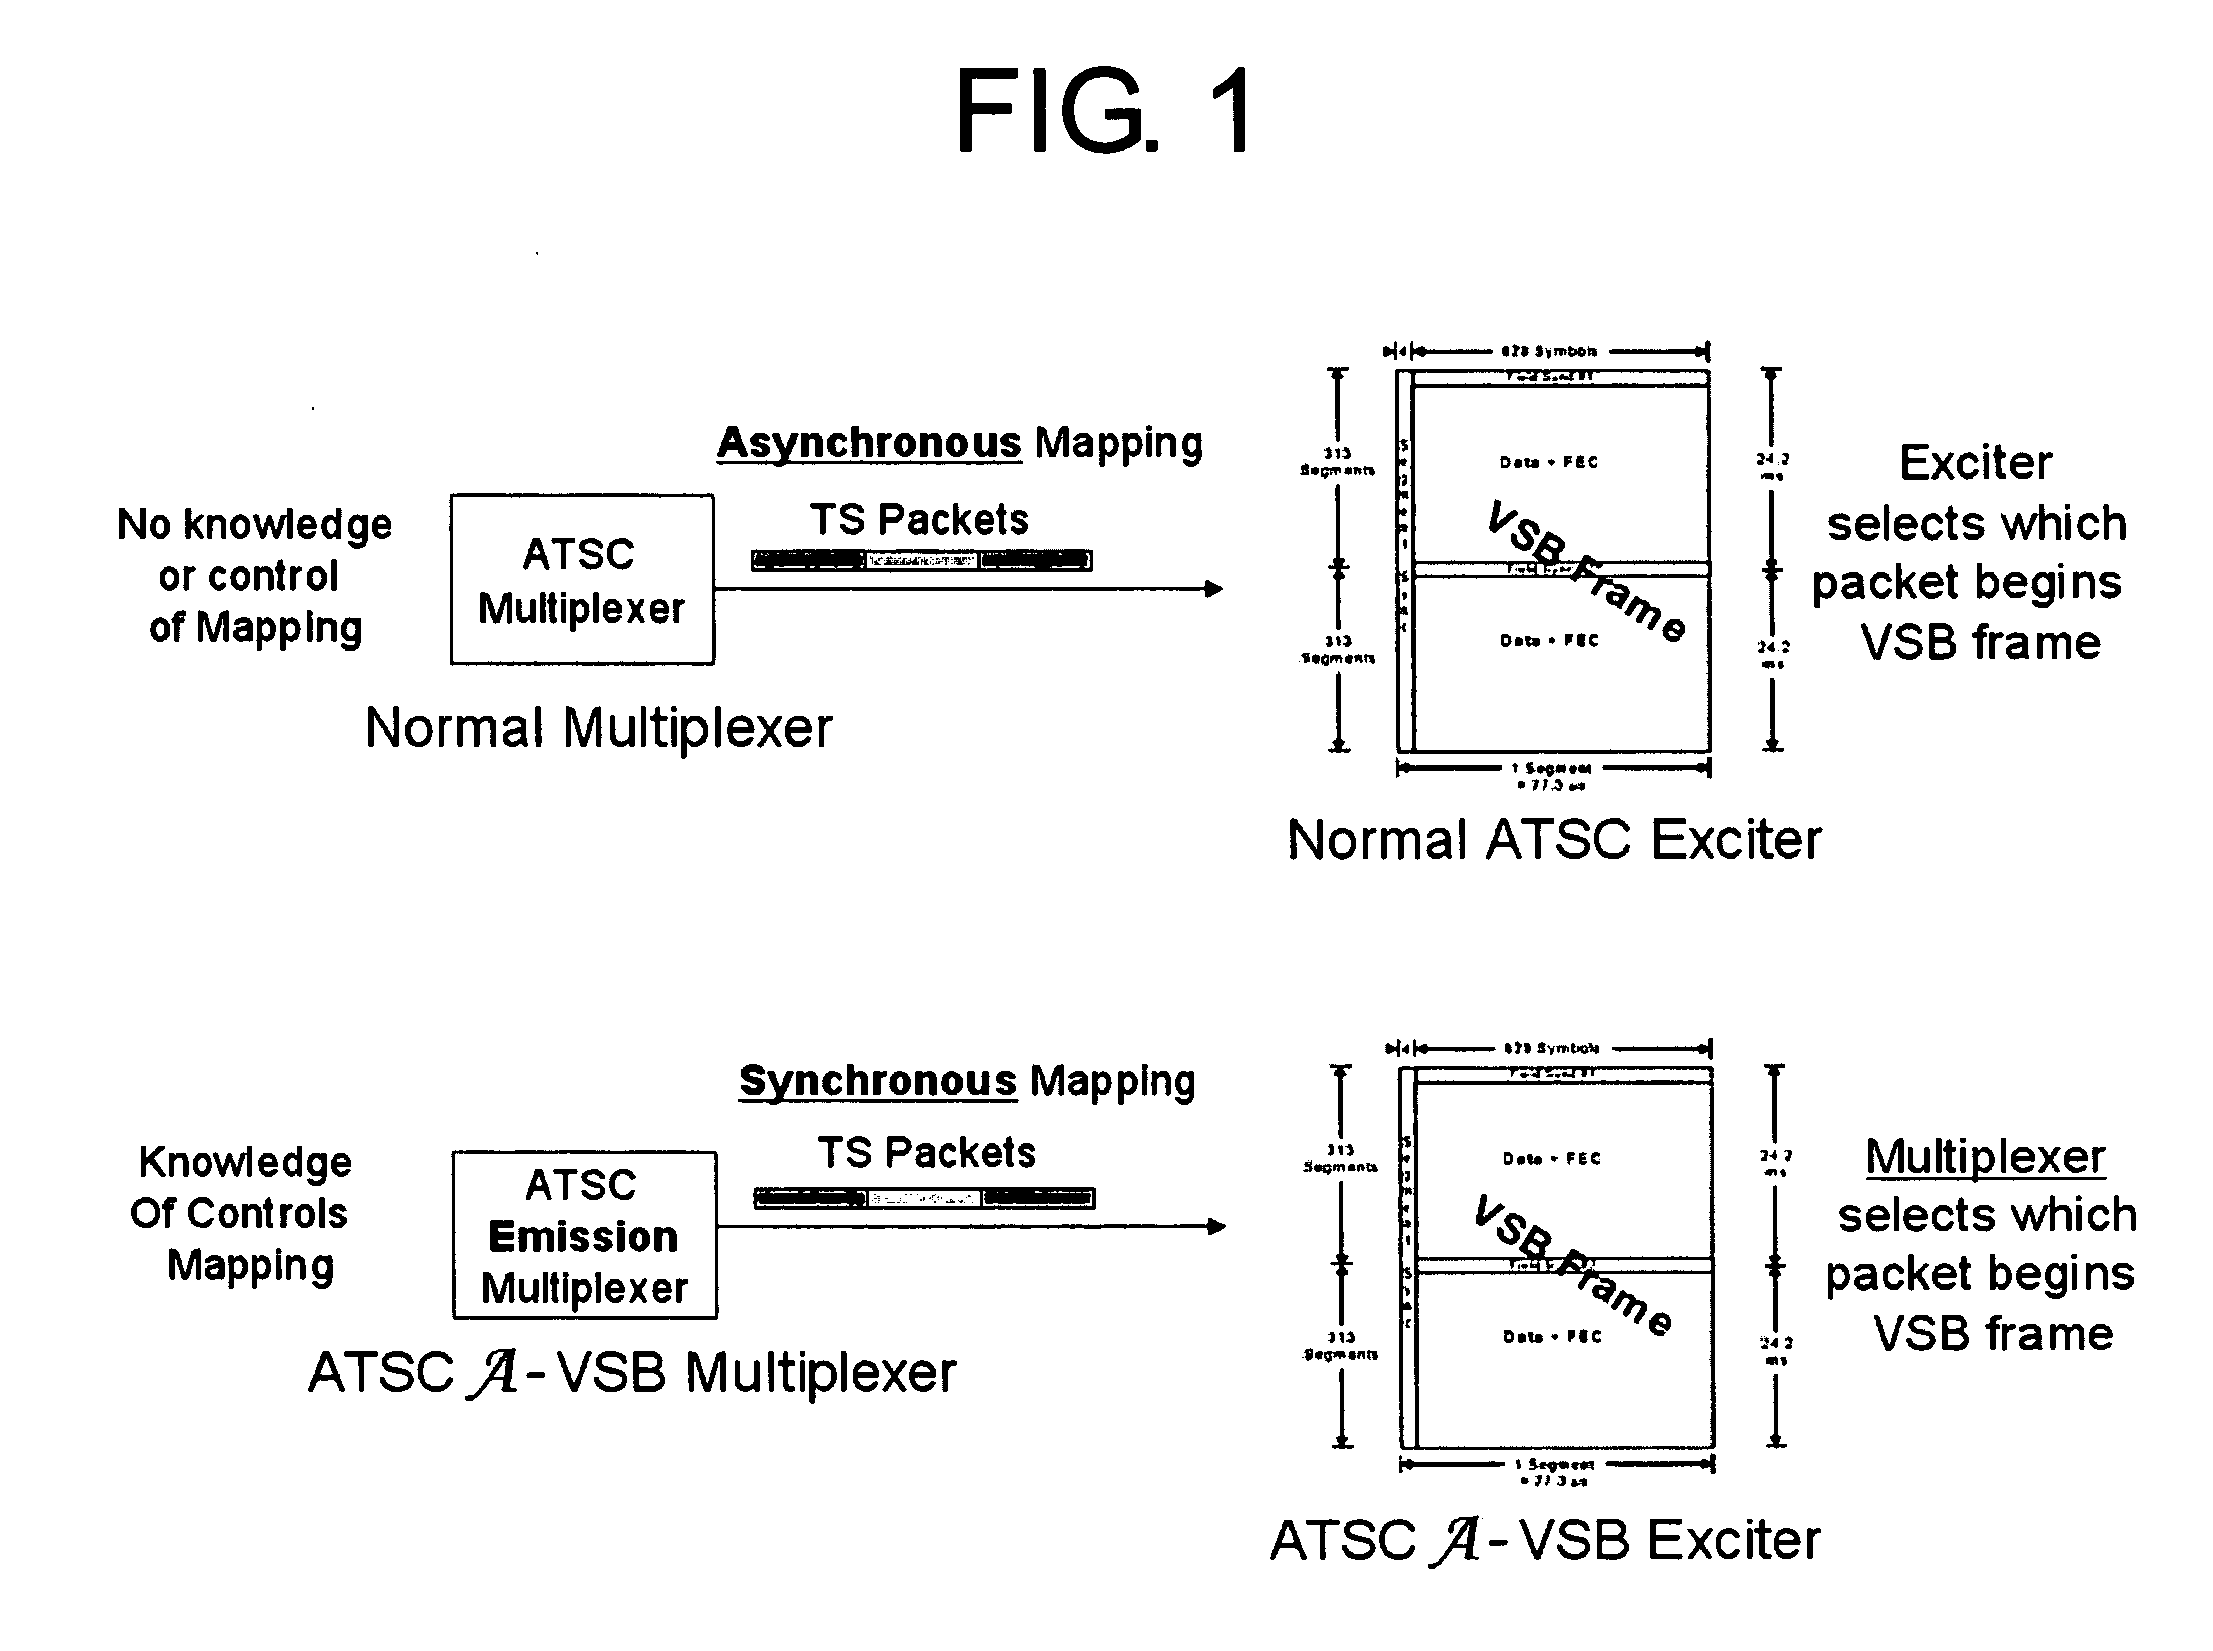 Advanced-VSB system (A-VSB)